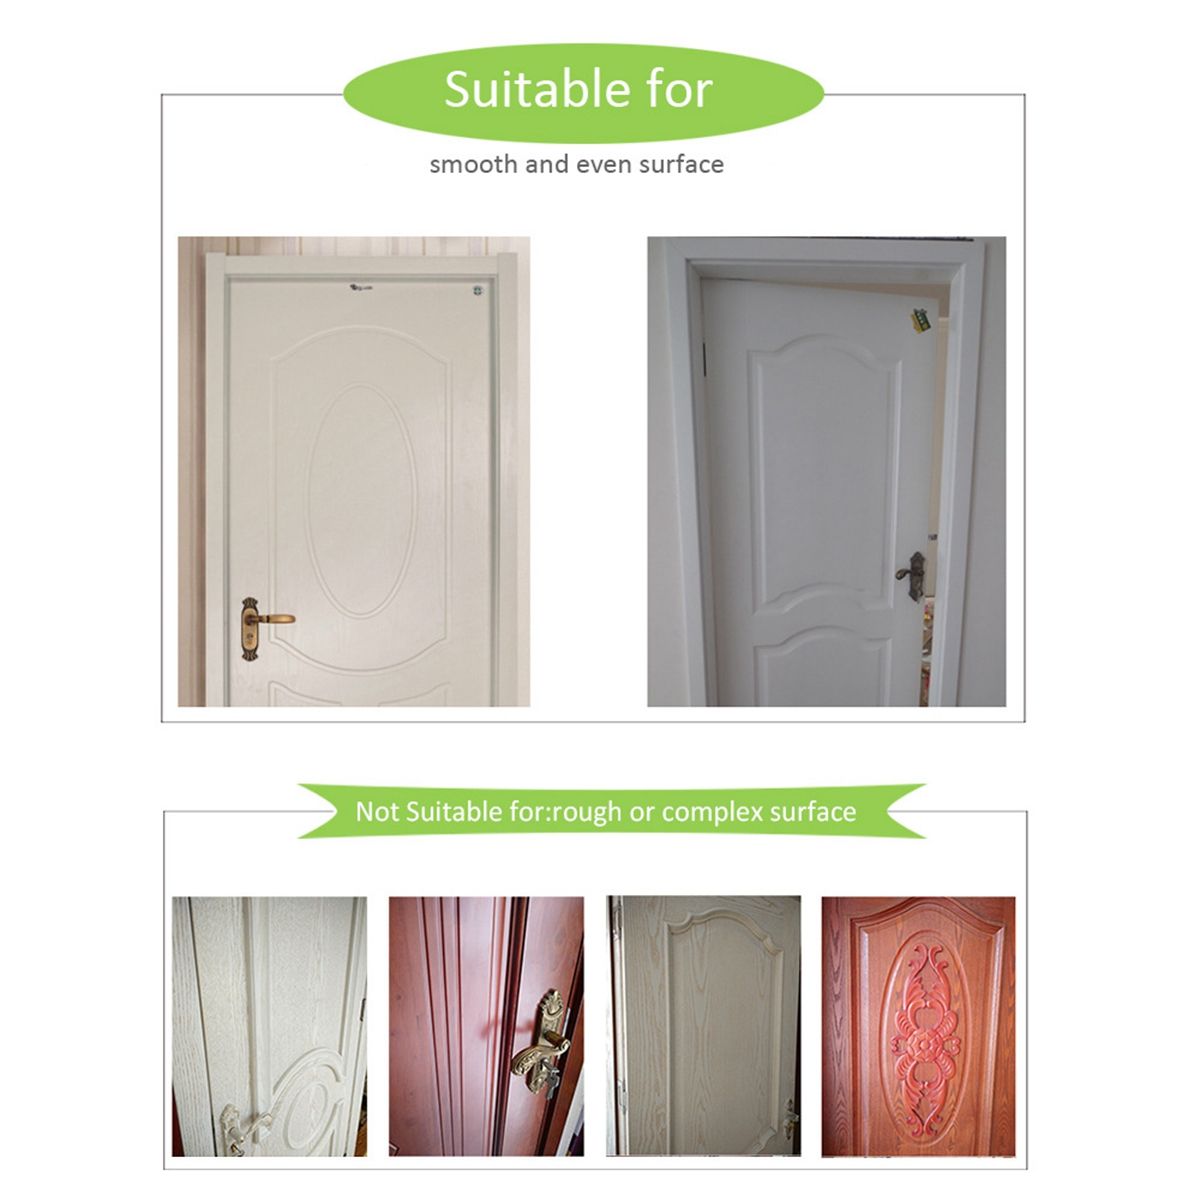 Iron-Gate-Sticker-PVC-Self-Adhesive-Waterproof-Refrigerator-Door-Room-Cover-Wallpaper-Decal-1142761